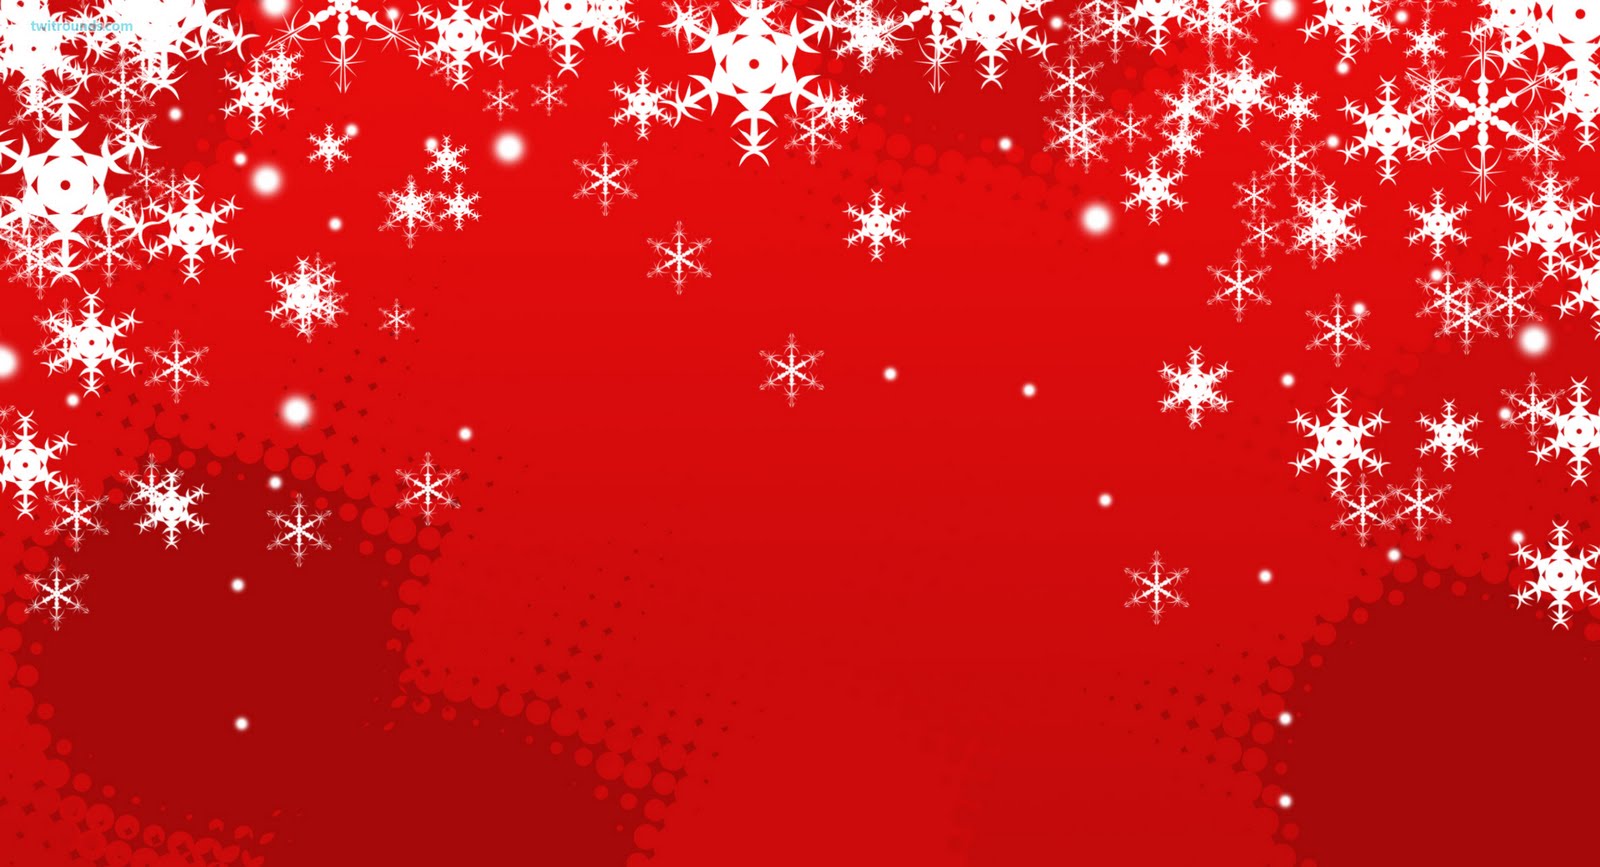 Happy Holidays Christmas white snowflakes desktop red background X mas